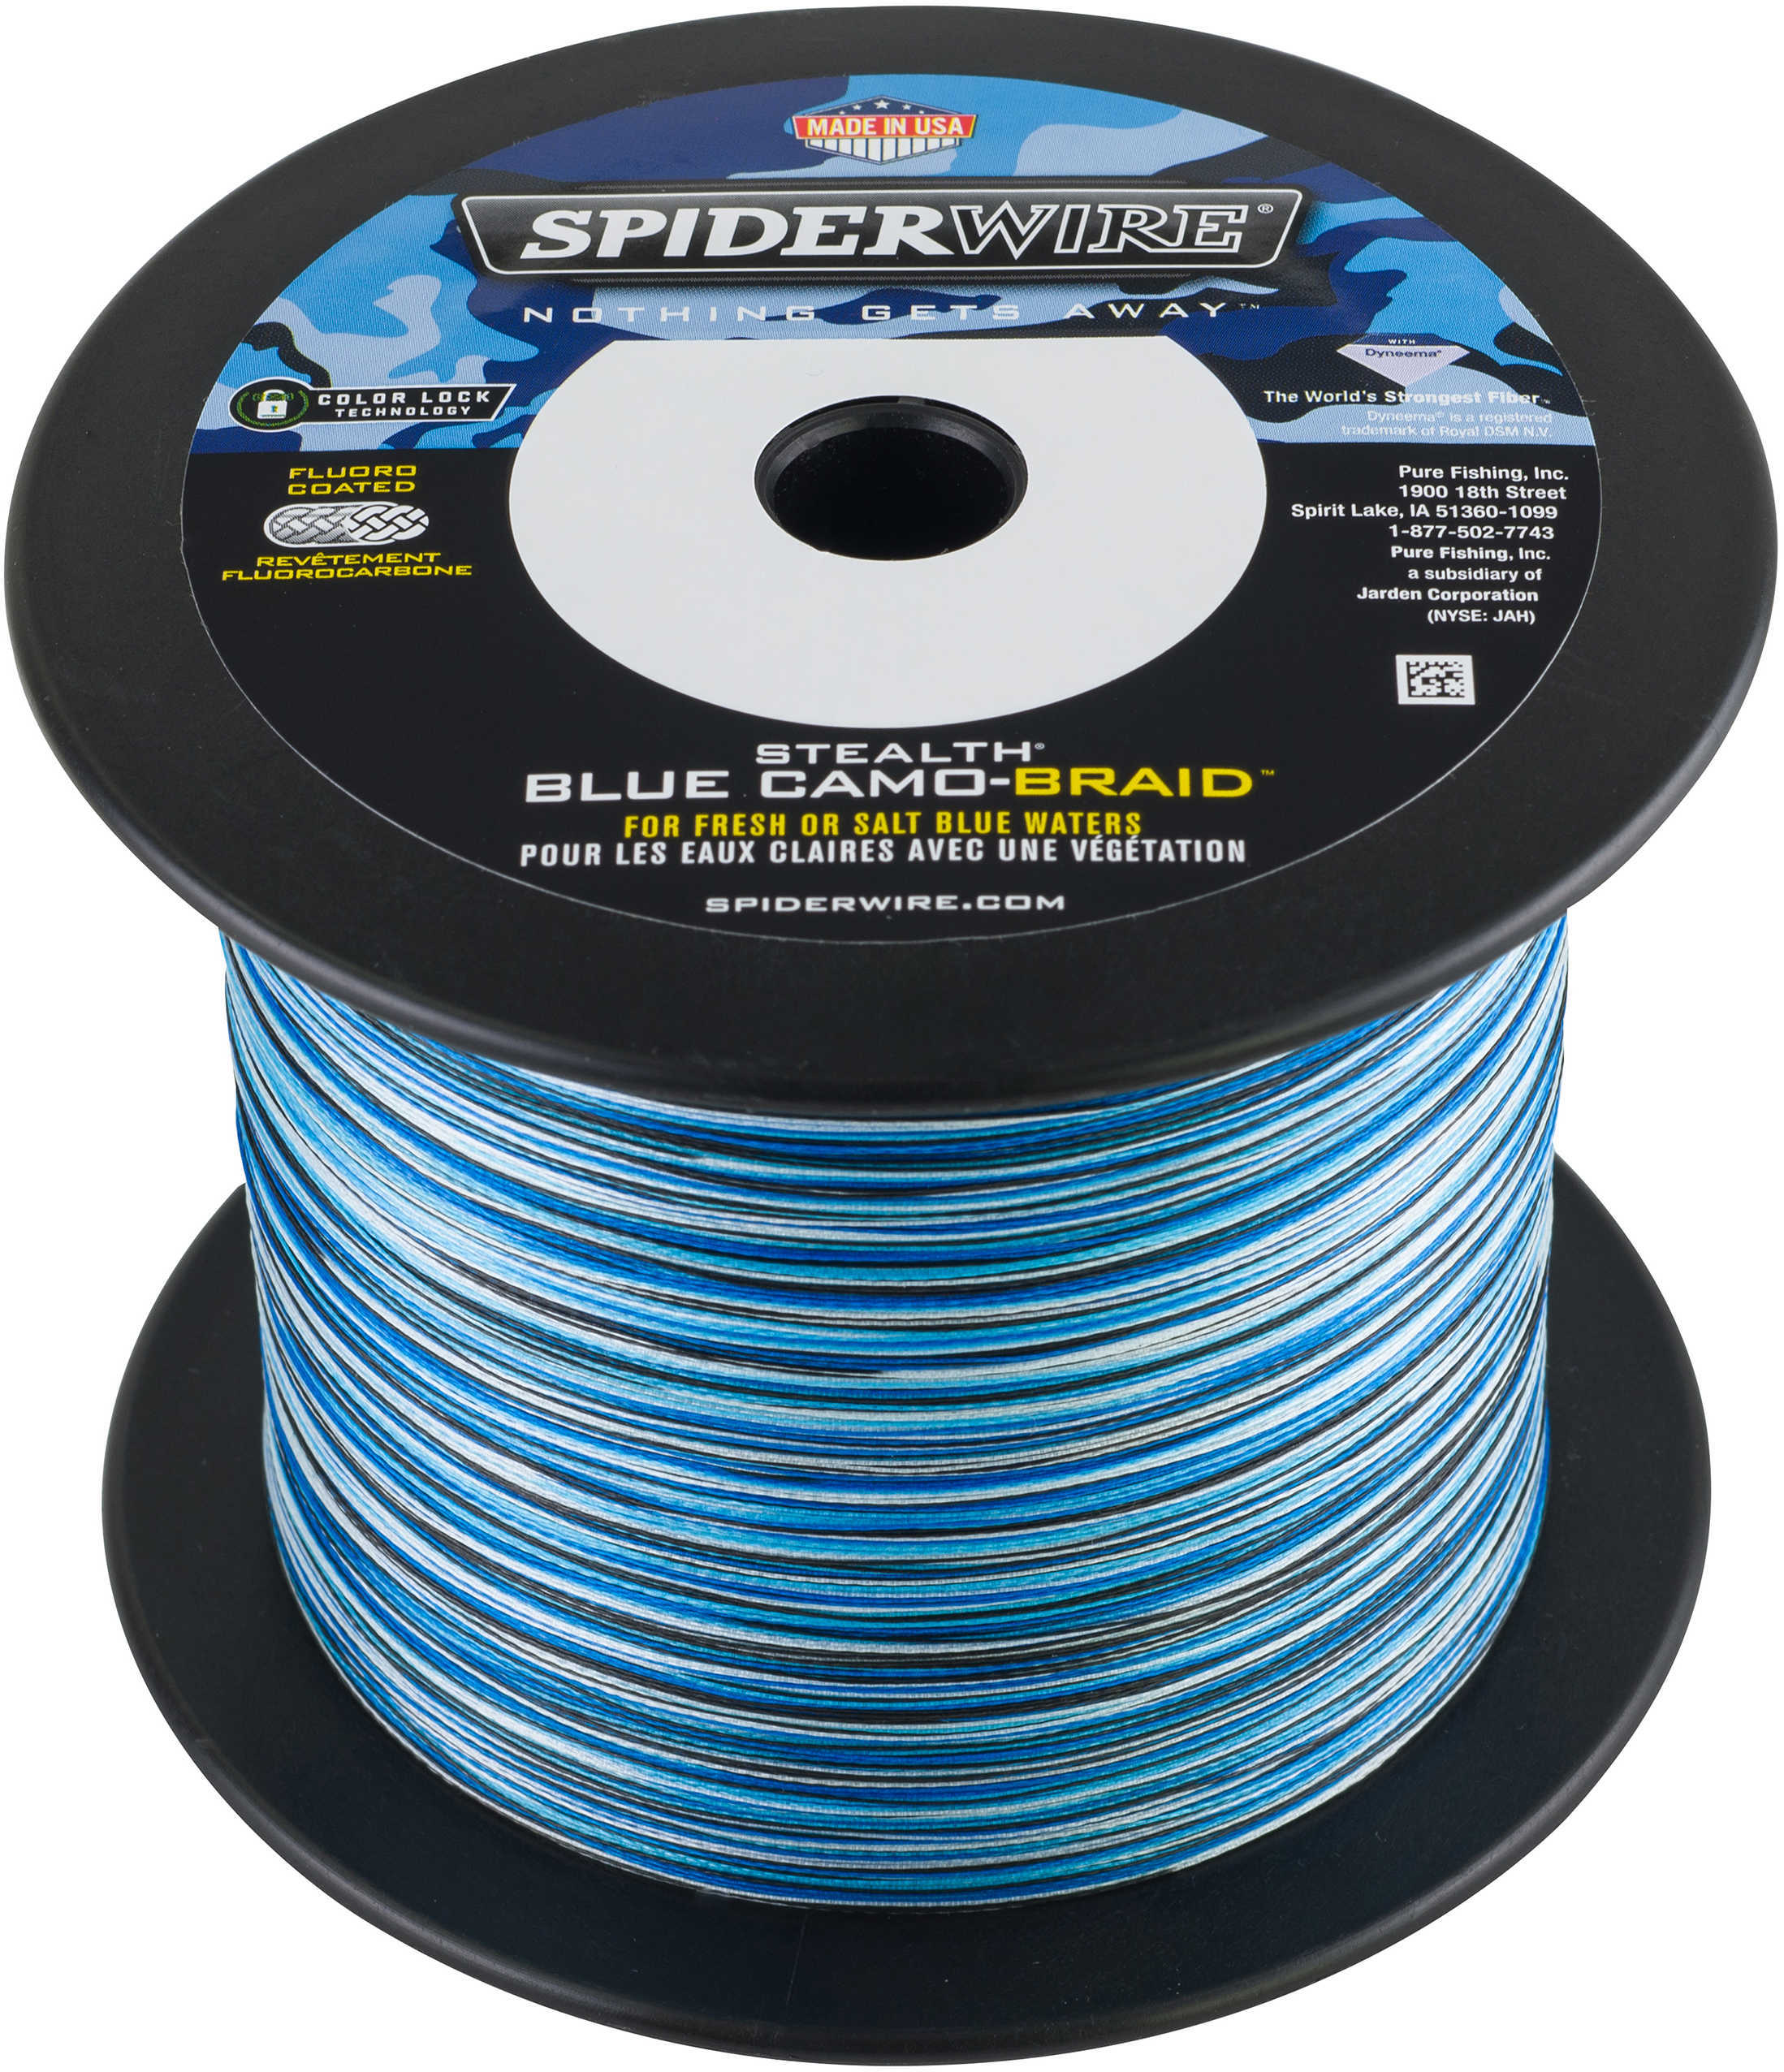 Spiderwire Stealth Braid 1500 Yards , 65 lbs Strength, 0.015" Diameter, Blue Camo Md: 1370459